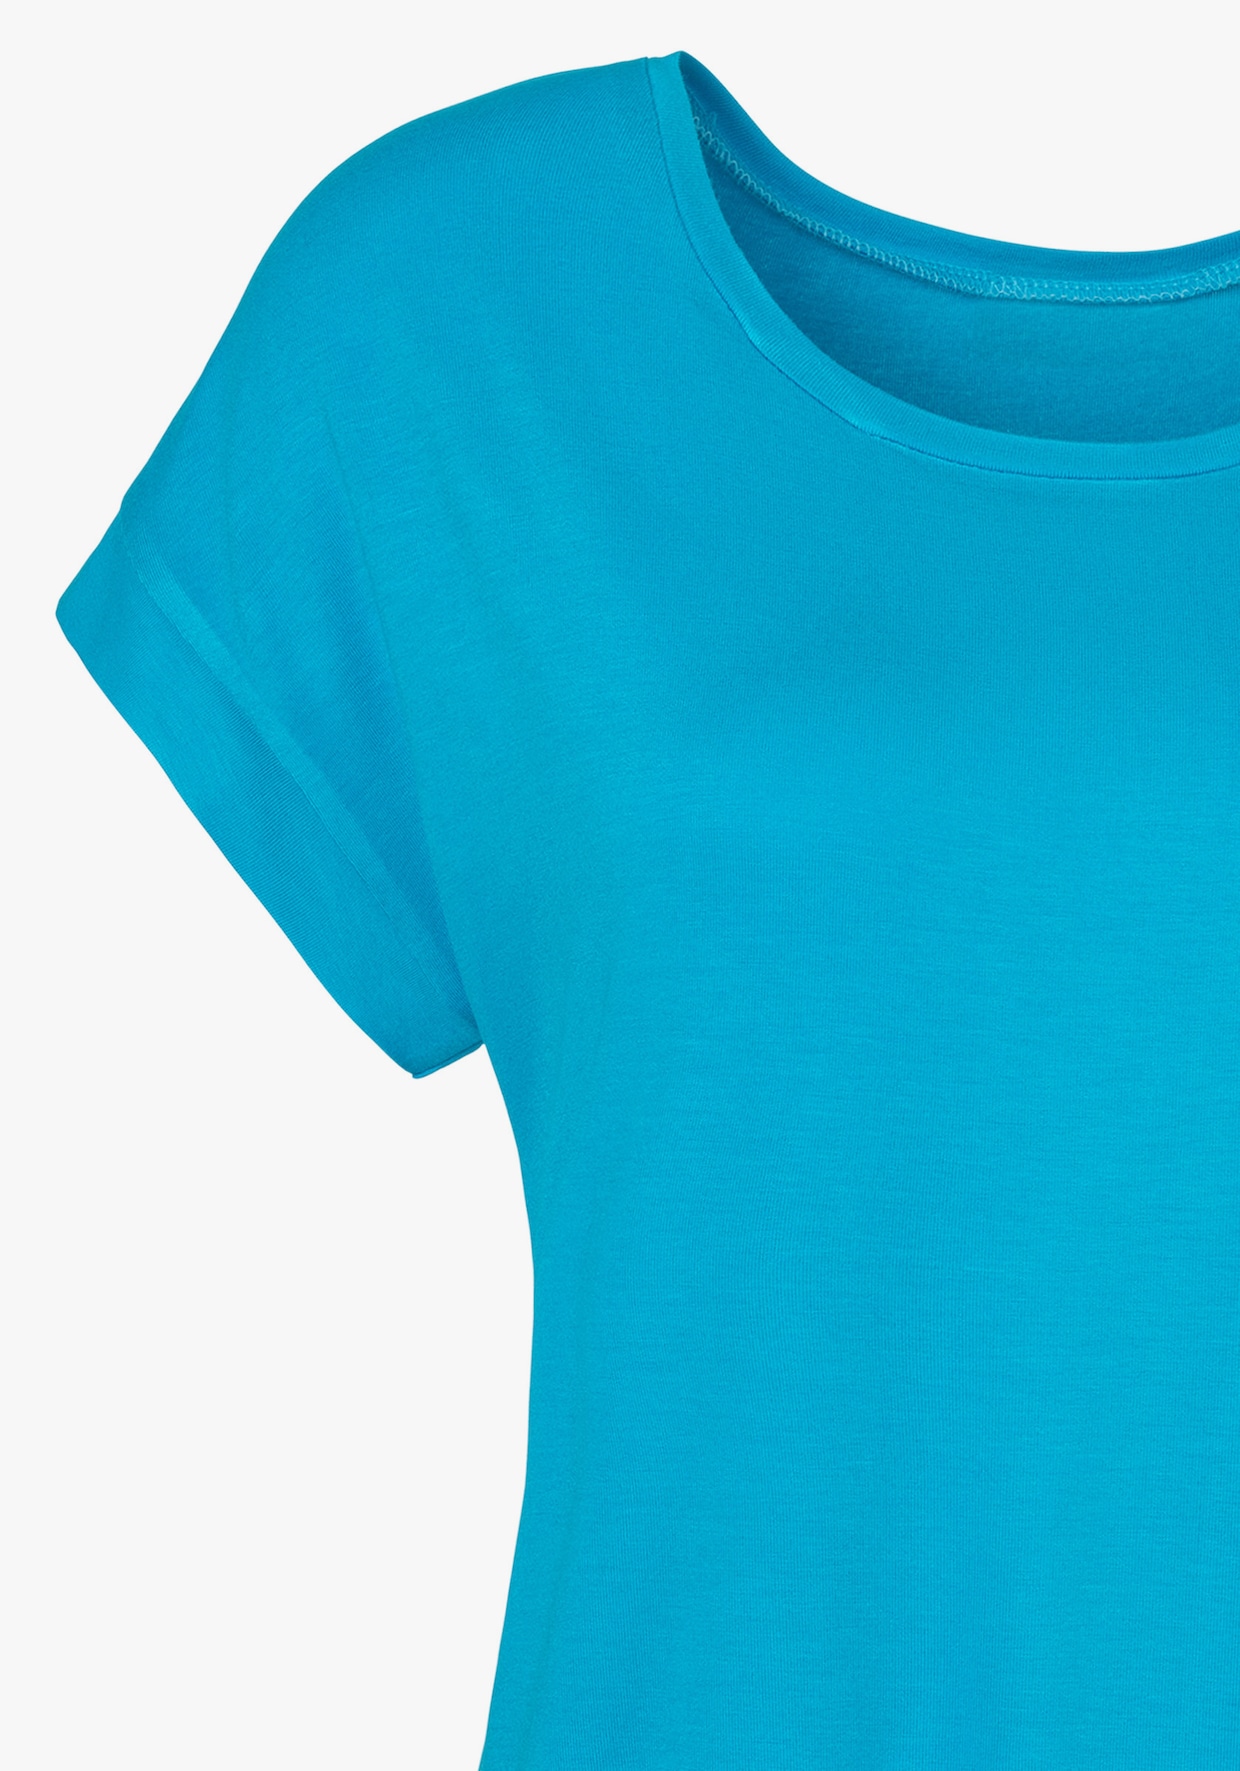 Vivance T-shirt - turquoise